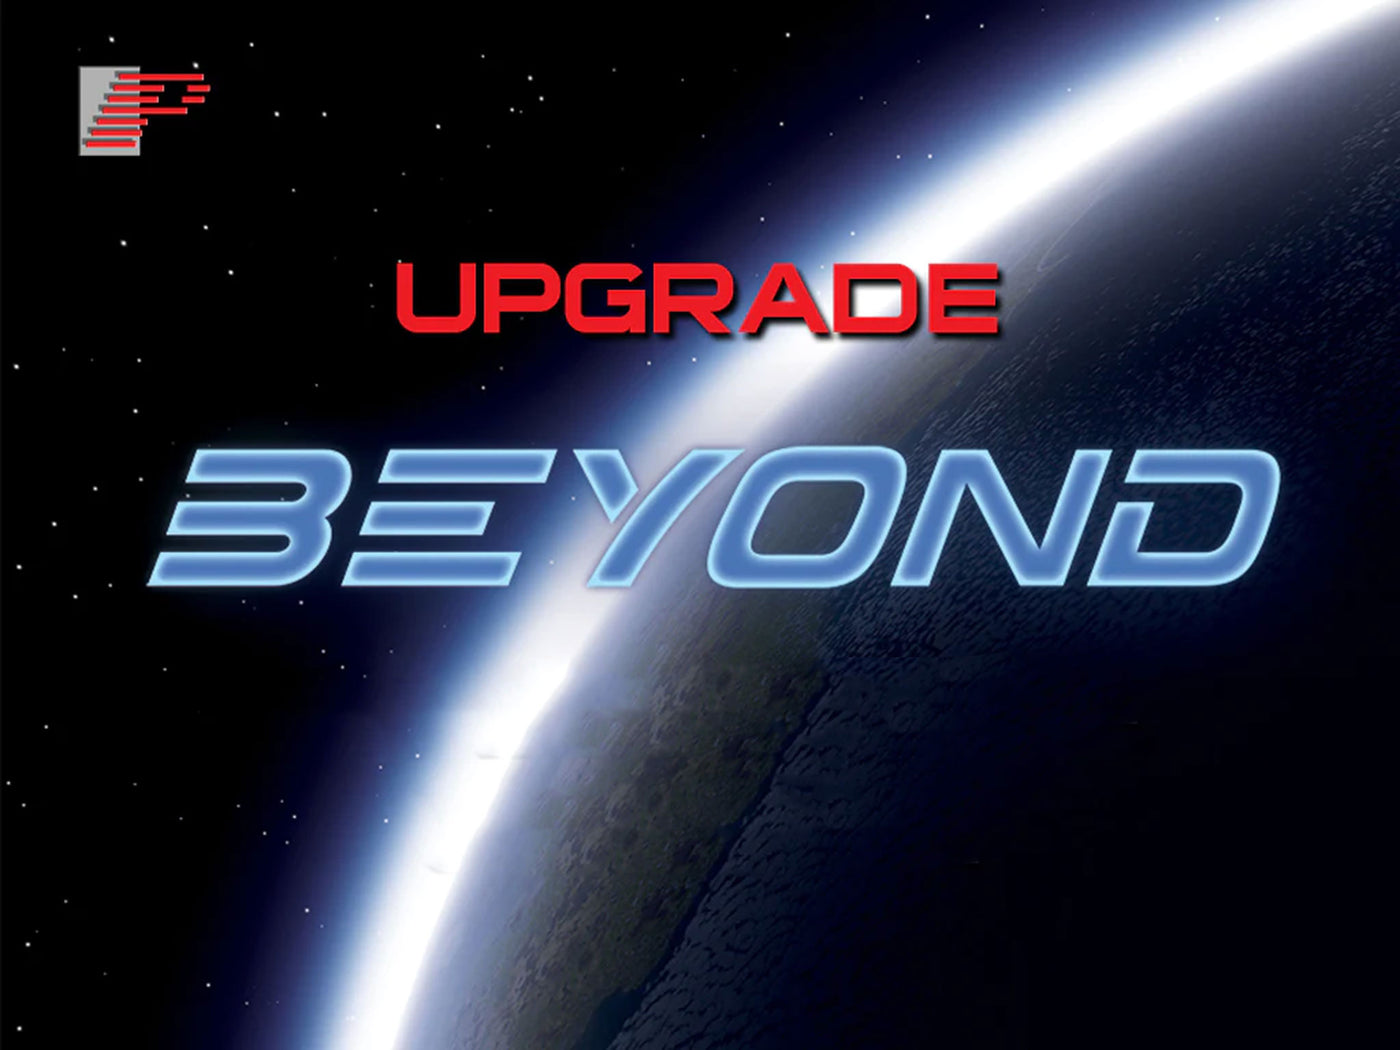 Beyond upgrade